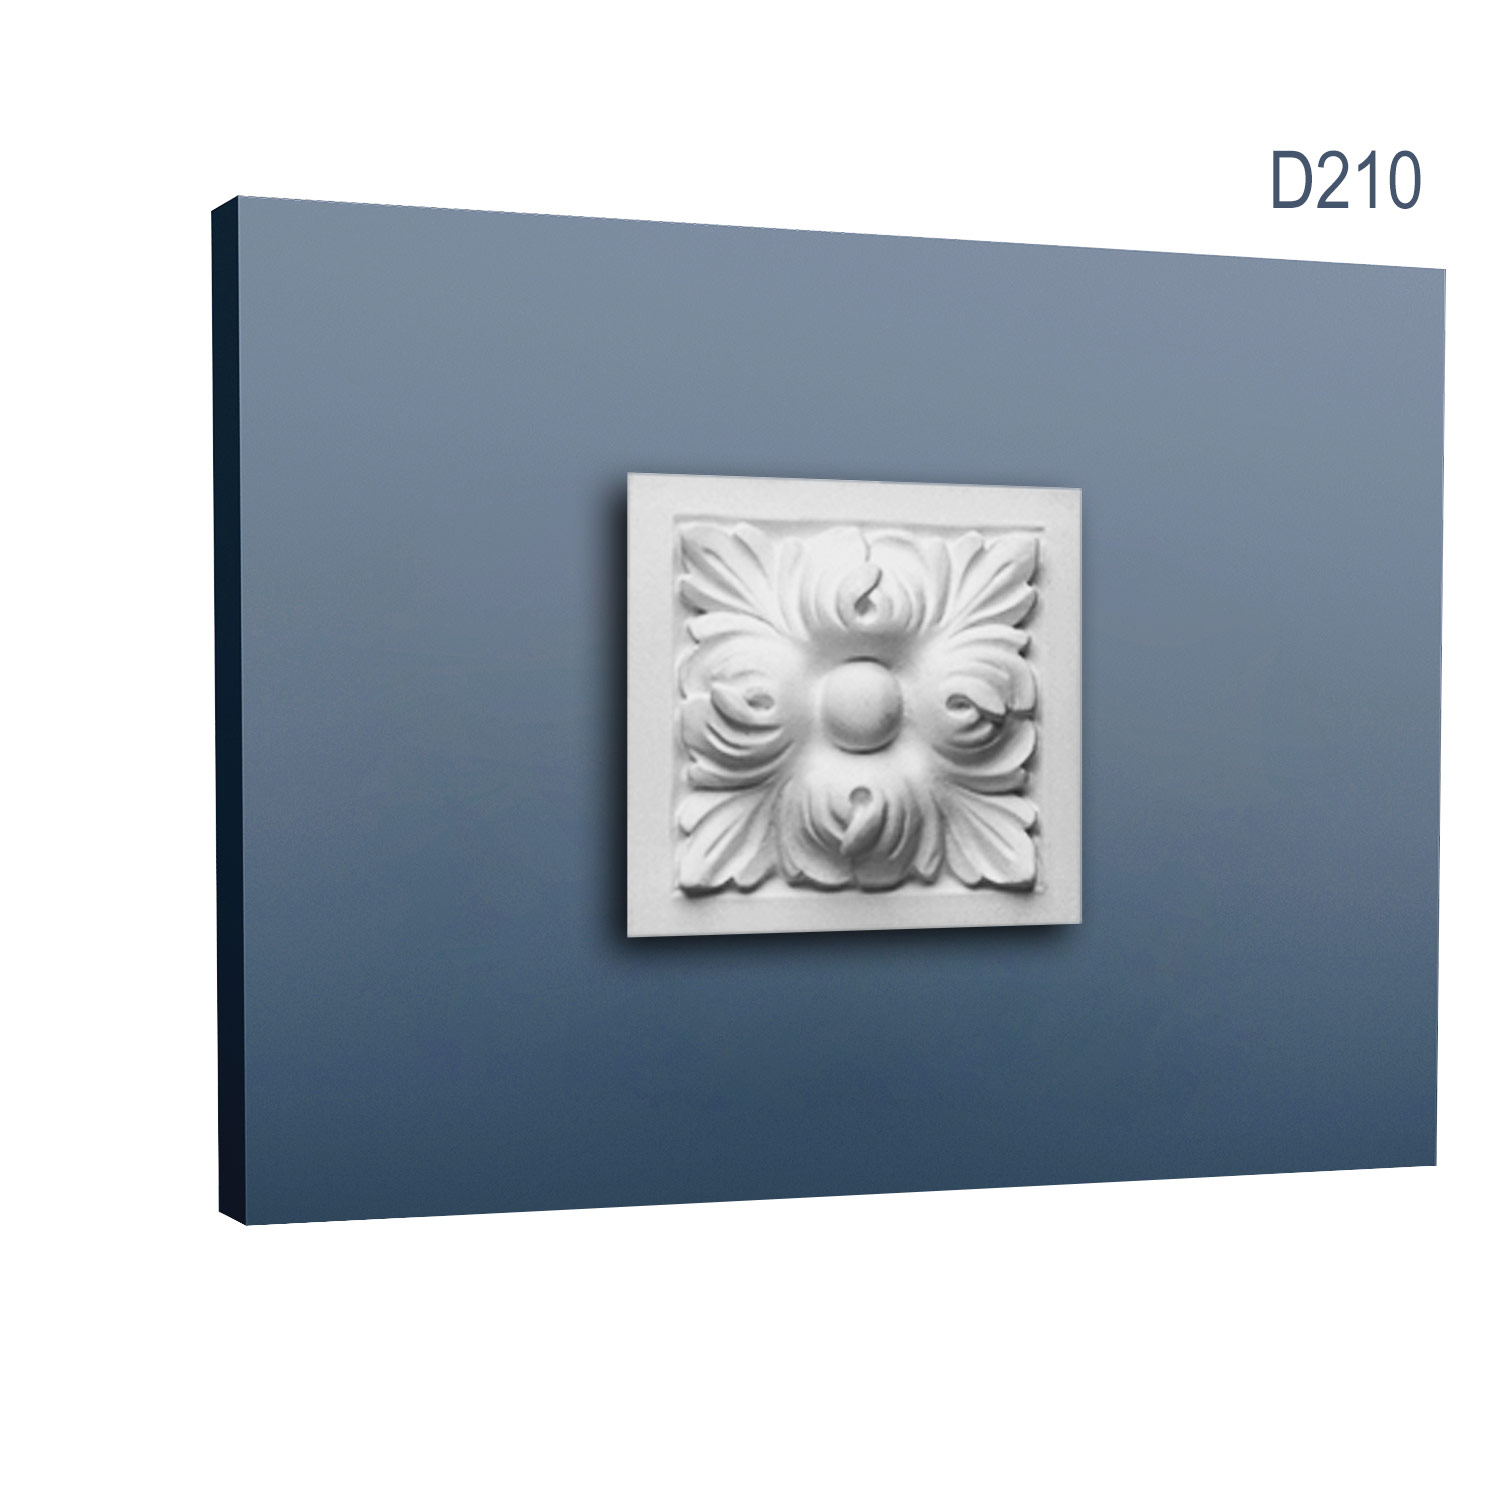 Ornament Ancadrament Usa Luxxus D210, Dimensiuni: 9.6 X 9.6 X 3.5 cm, Orac Decor Orac Decor